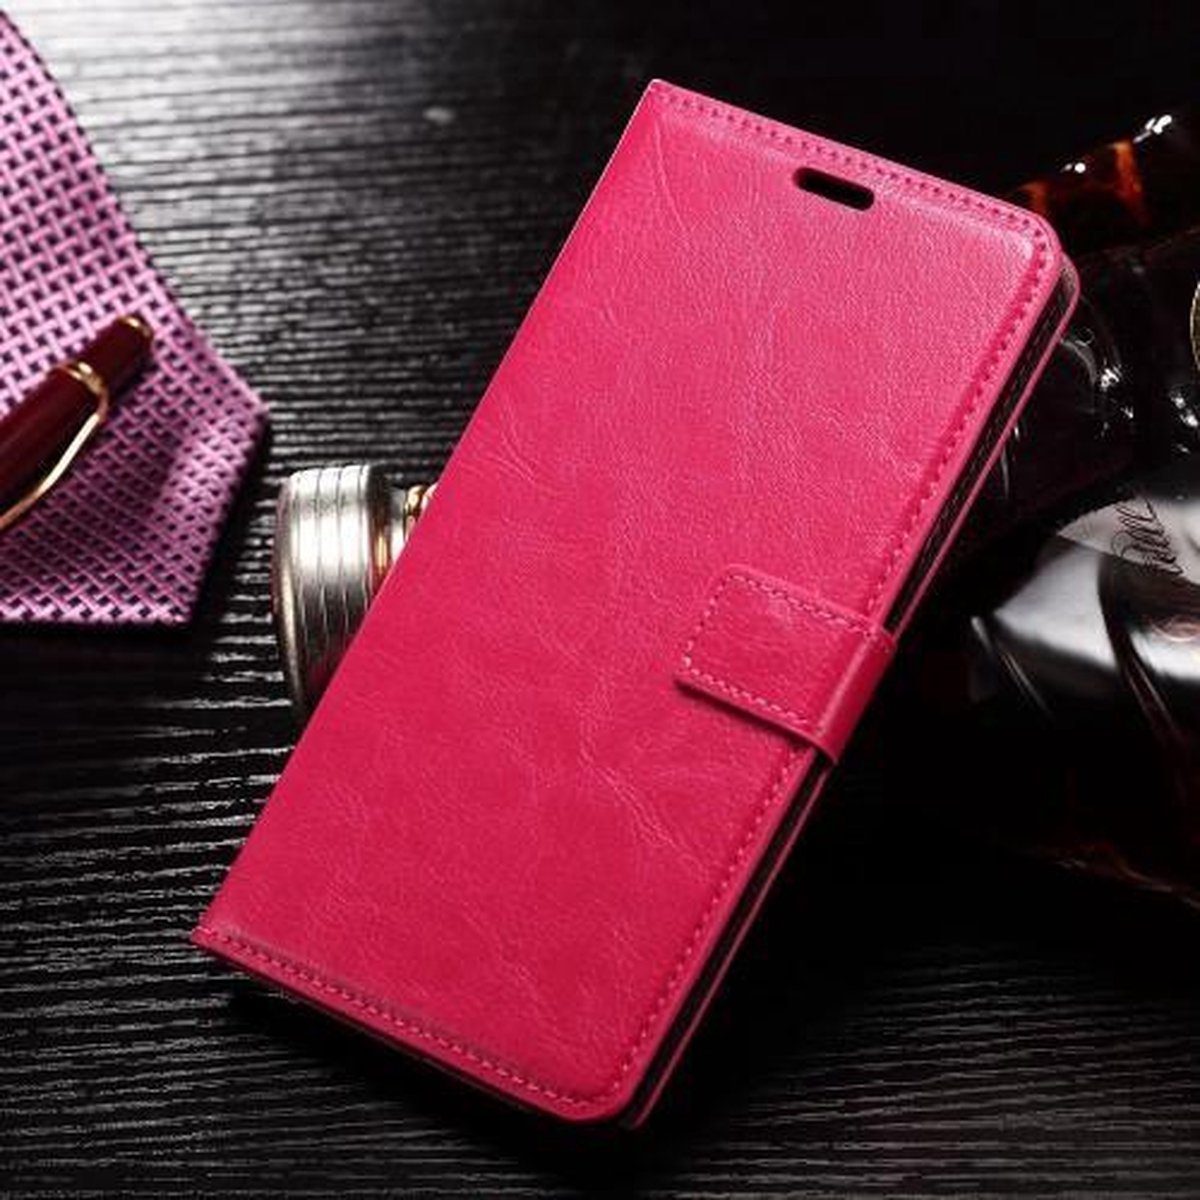 Cyclone cover roze wallet case hoesje iPhone 7 Plus